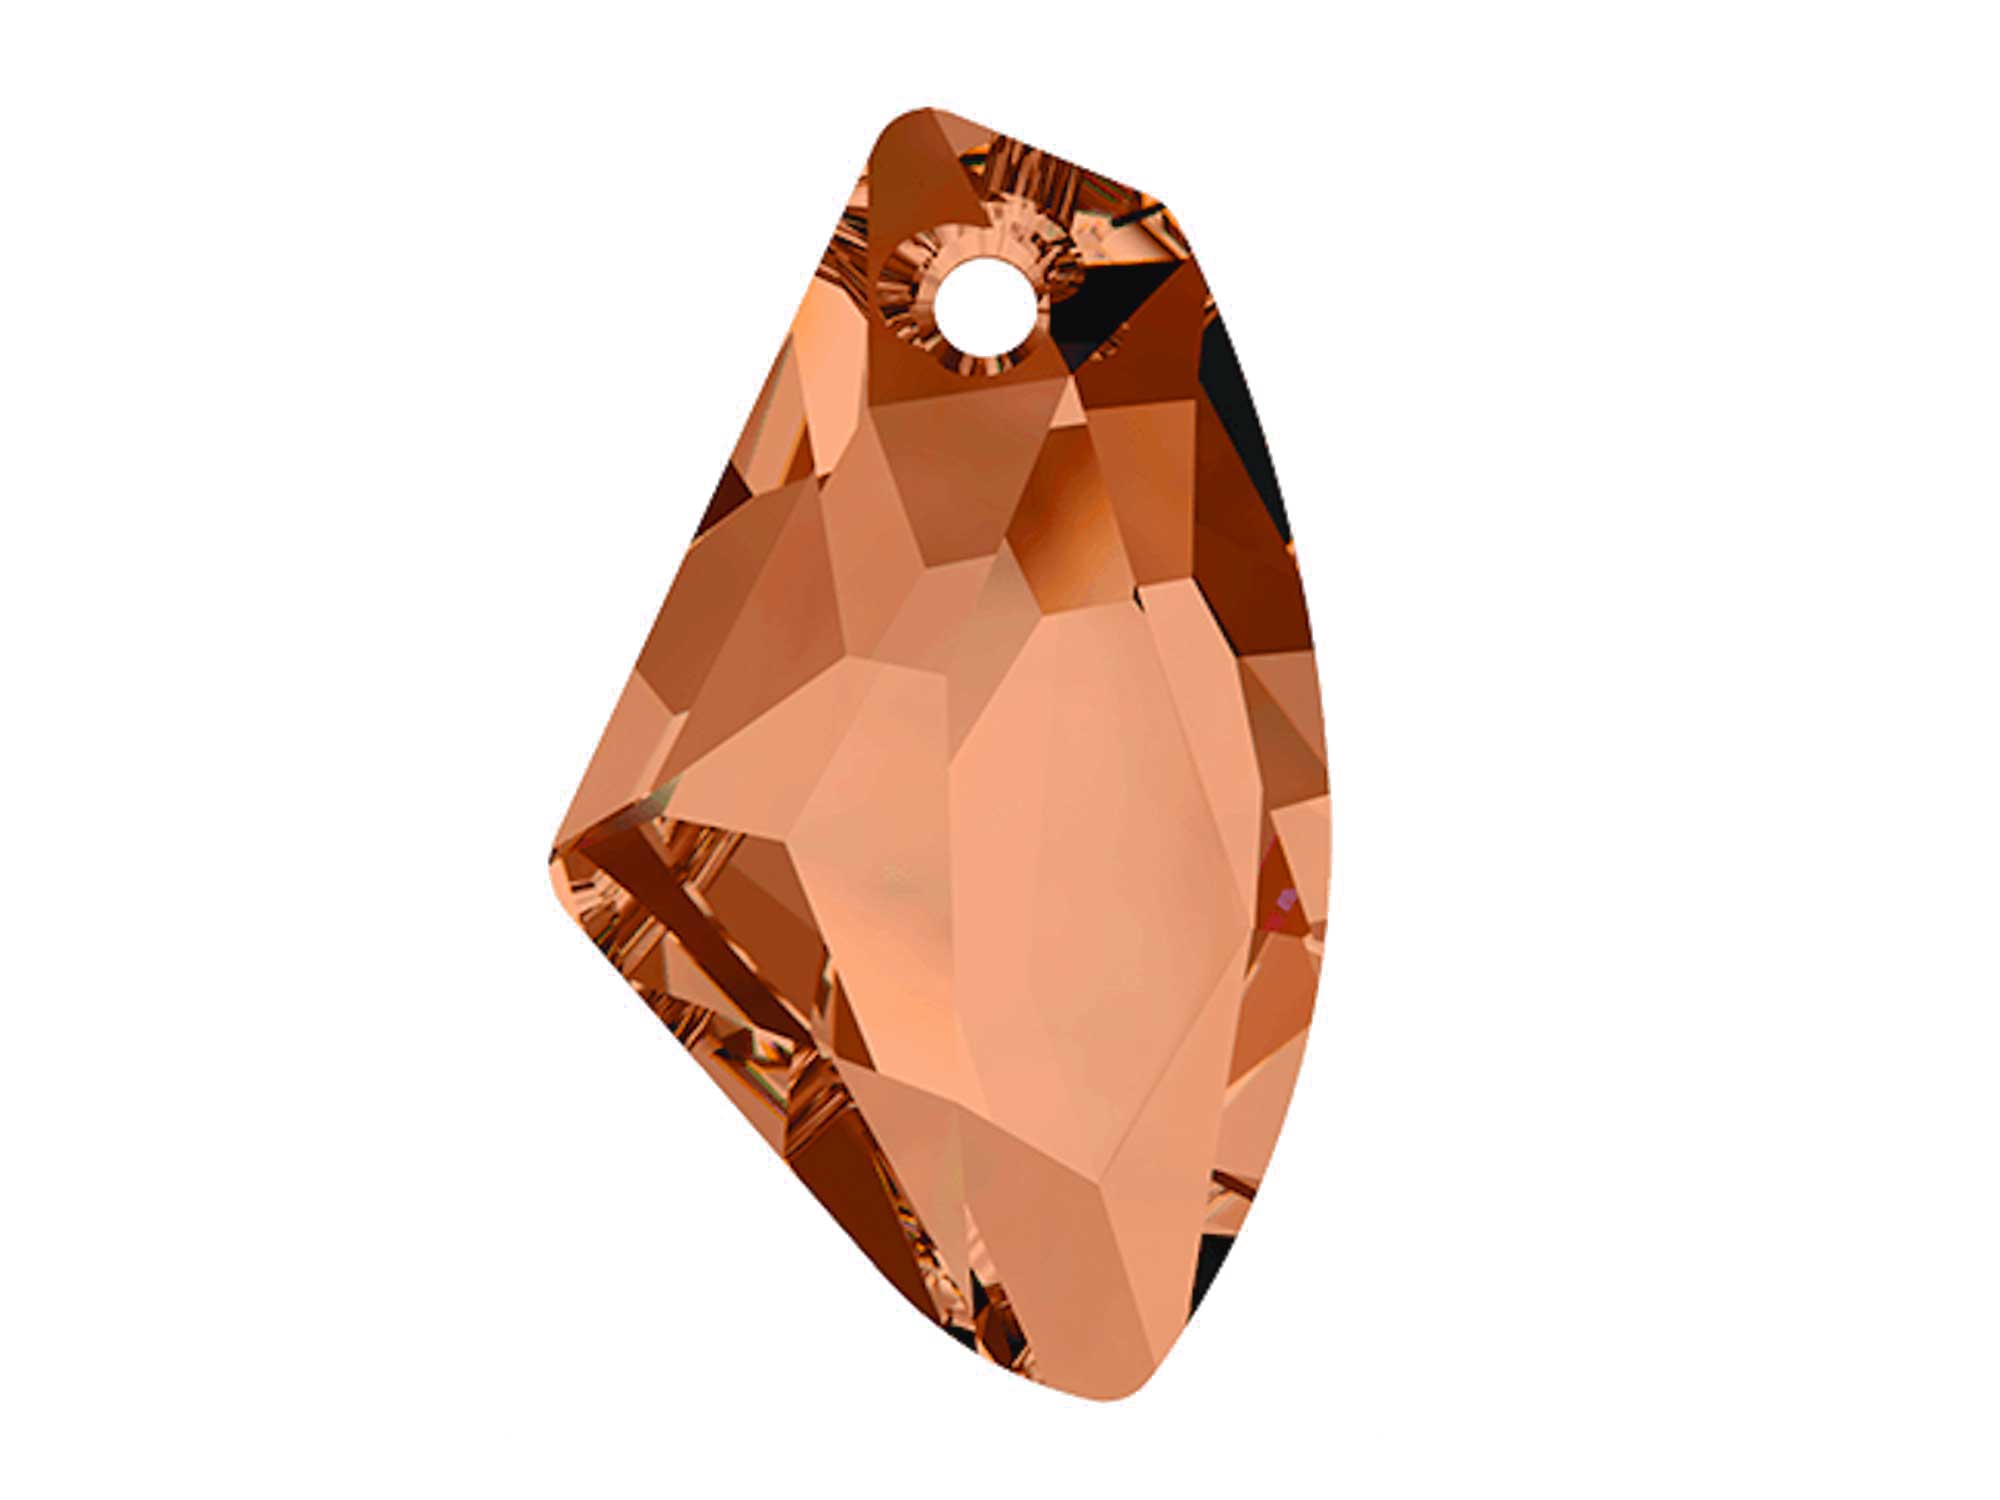 Swarovski crystal pendants